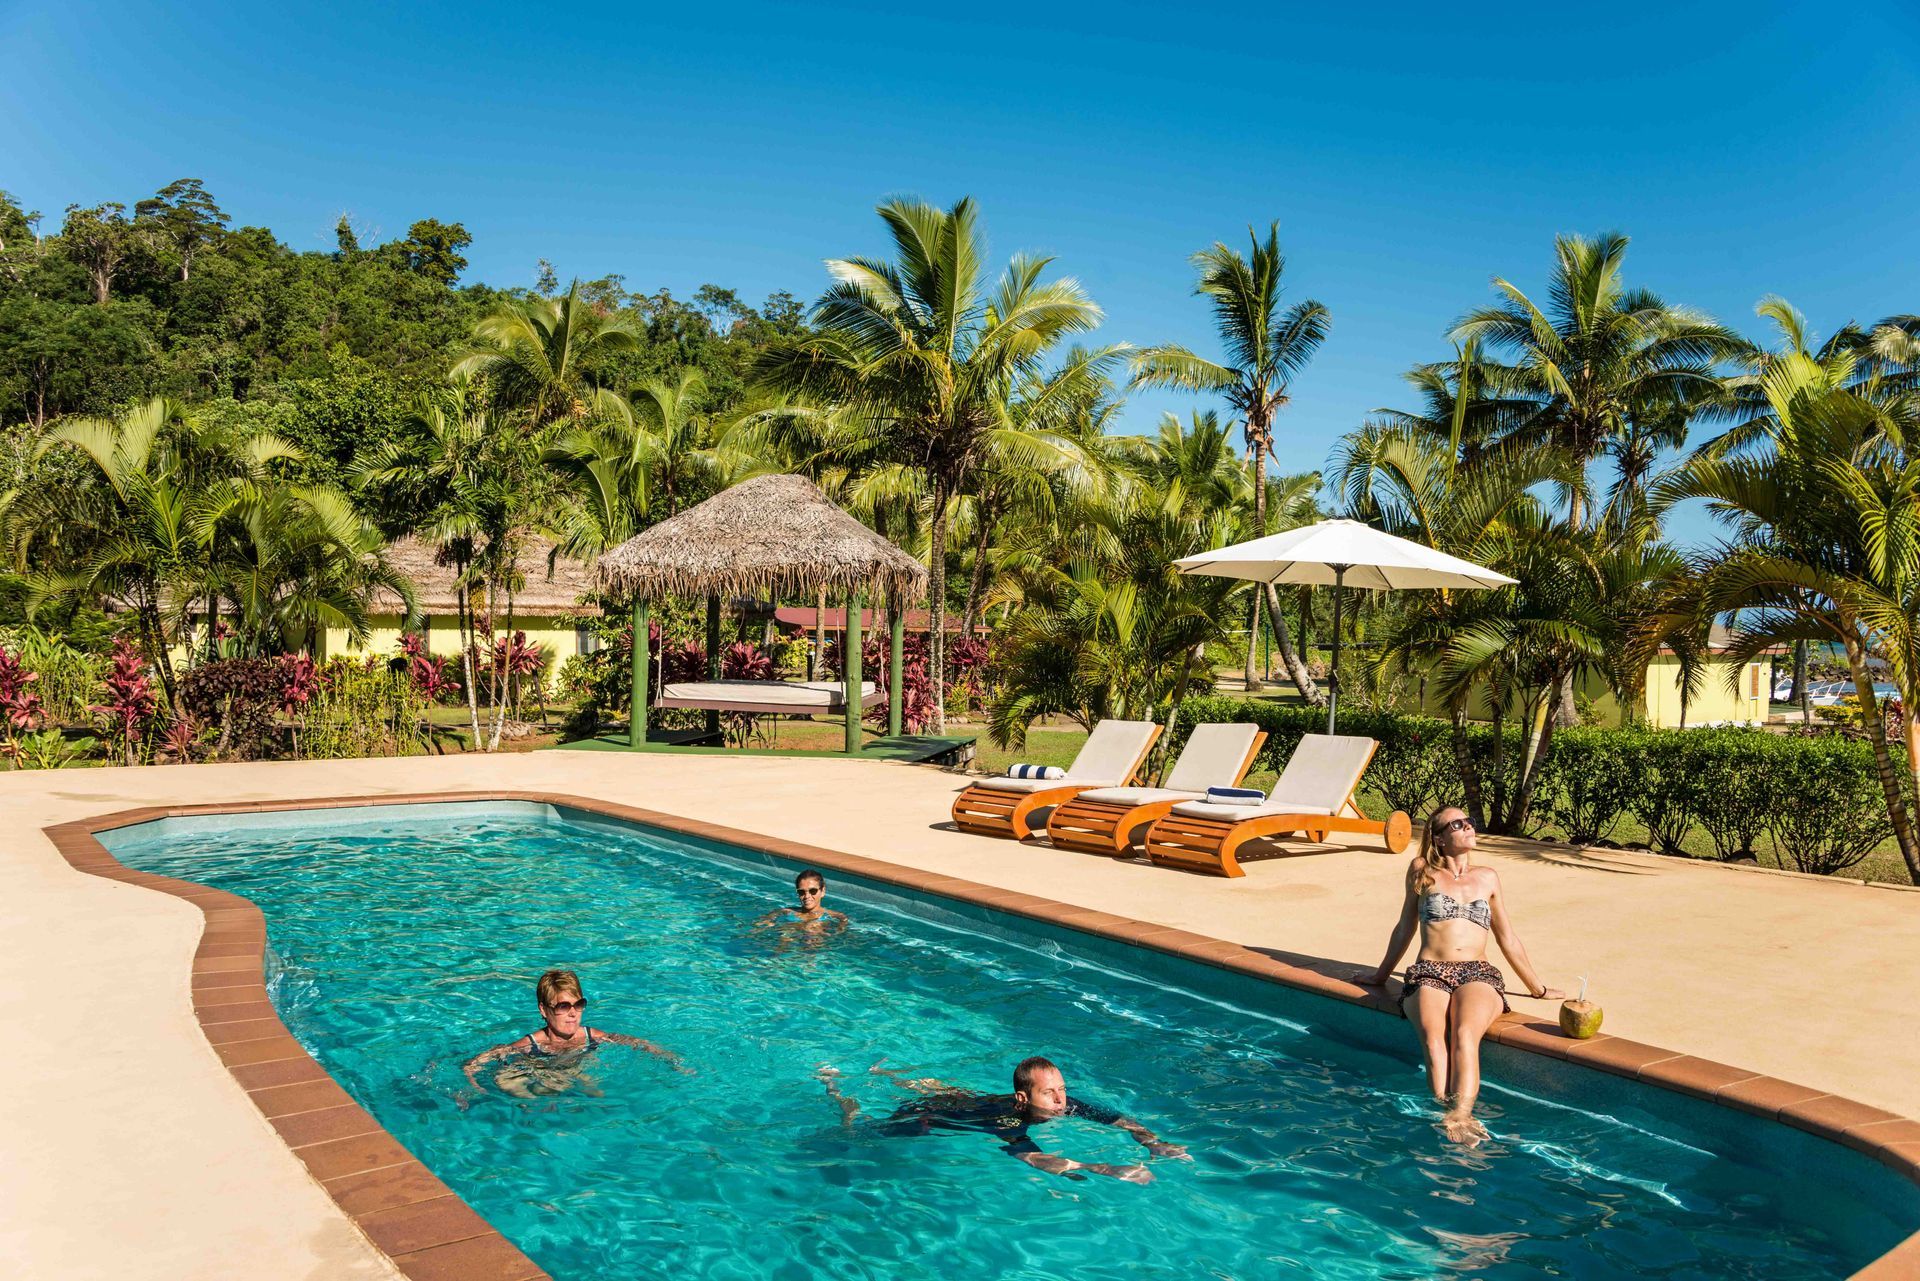 Waidroka Bay Resort swimming pool